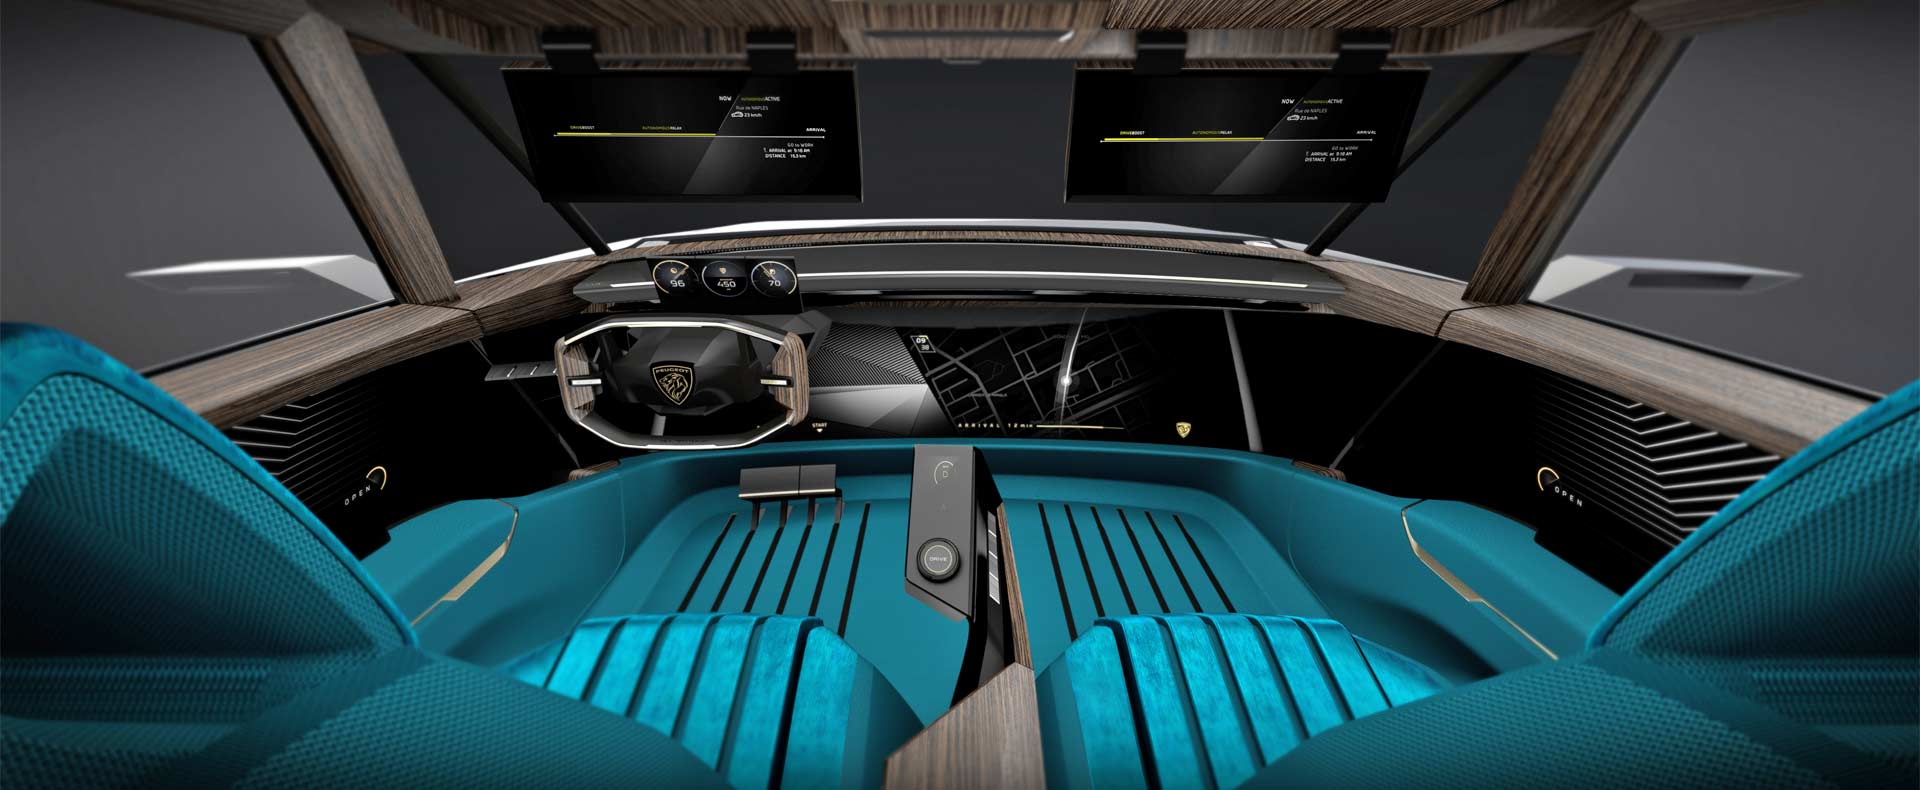 Peugeot-e-Legend-Concept-Interior_6